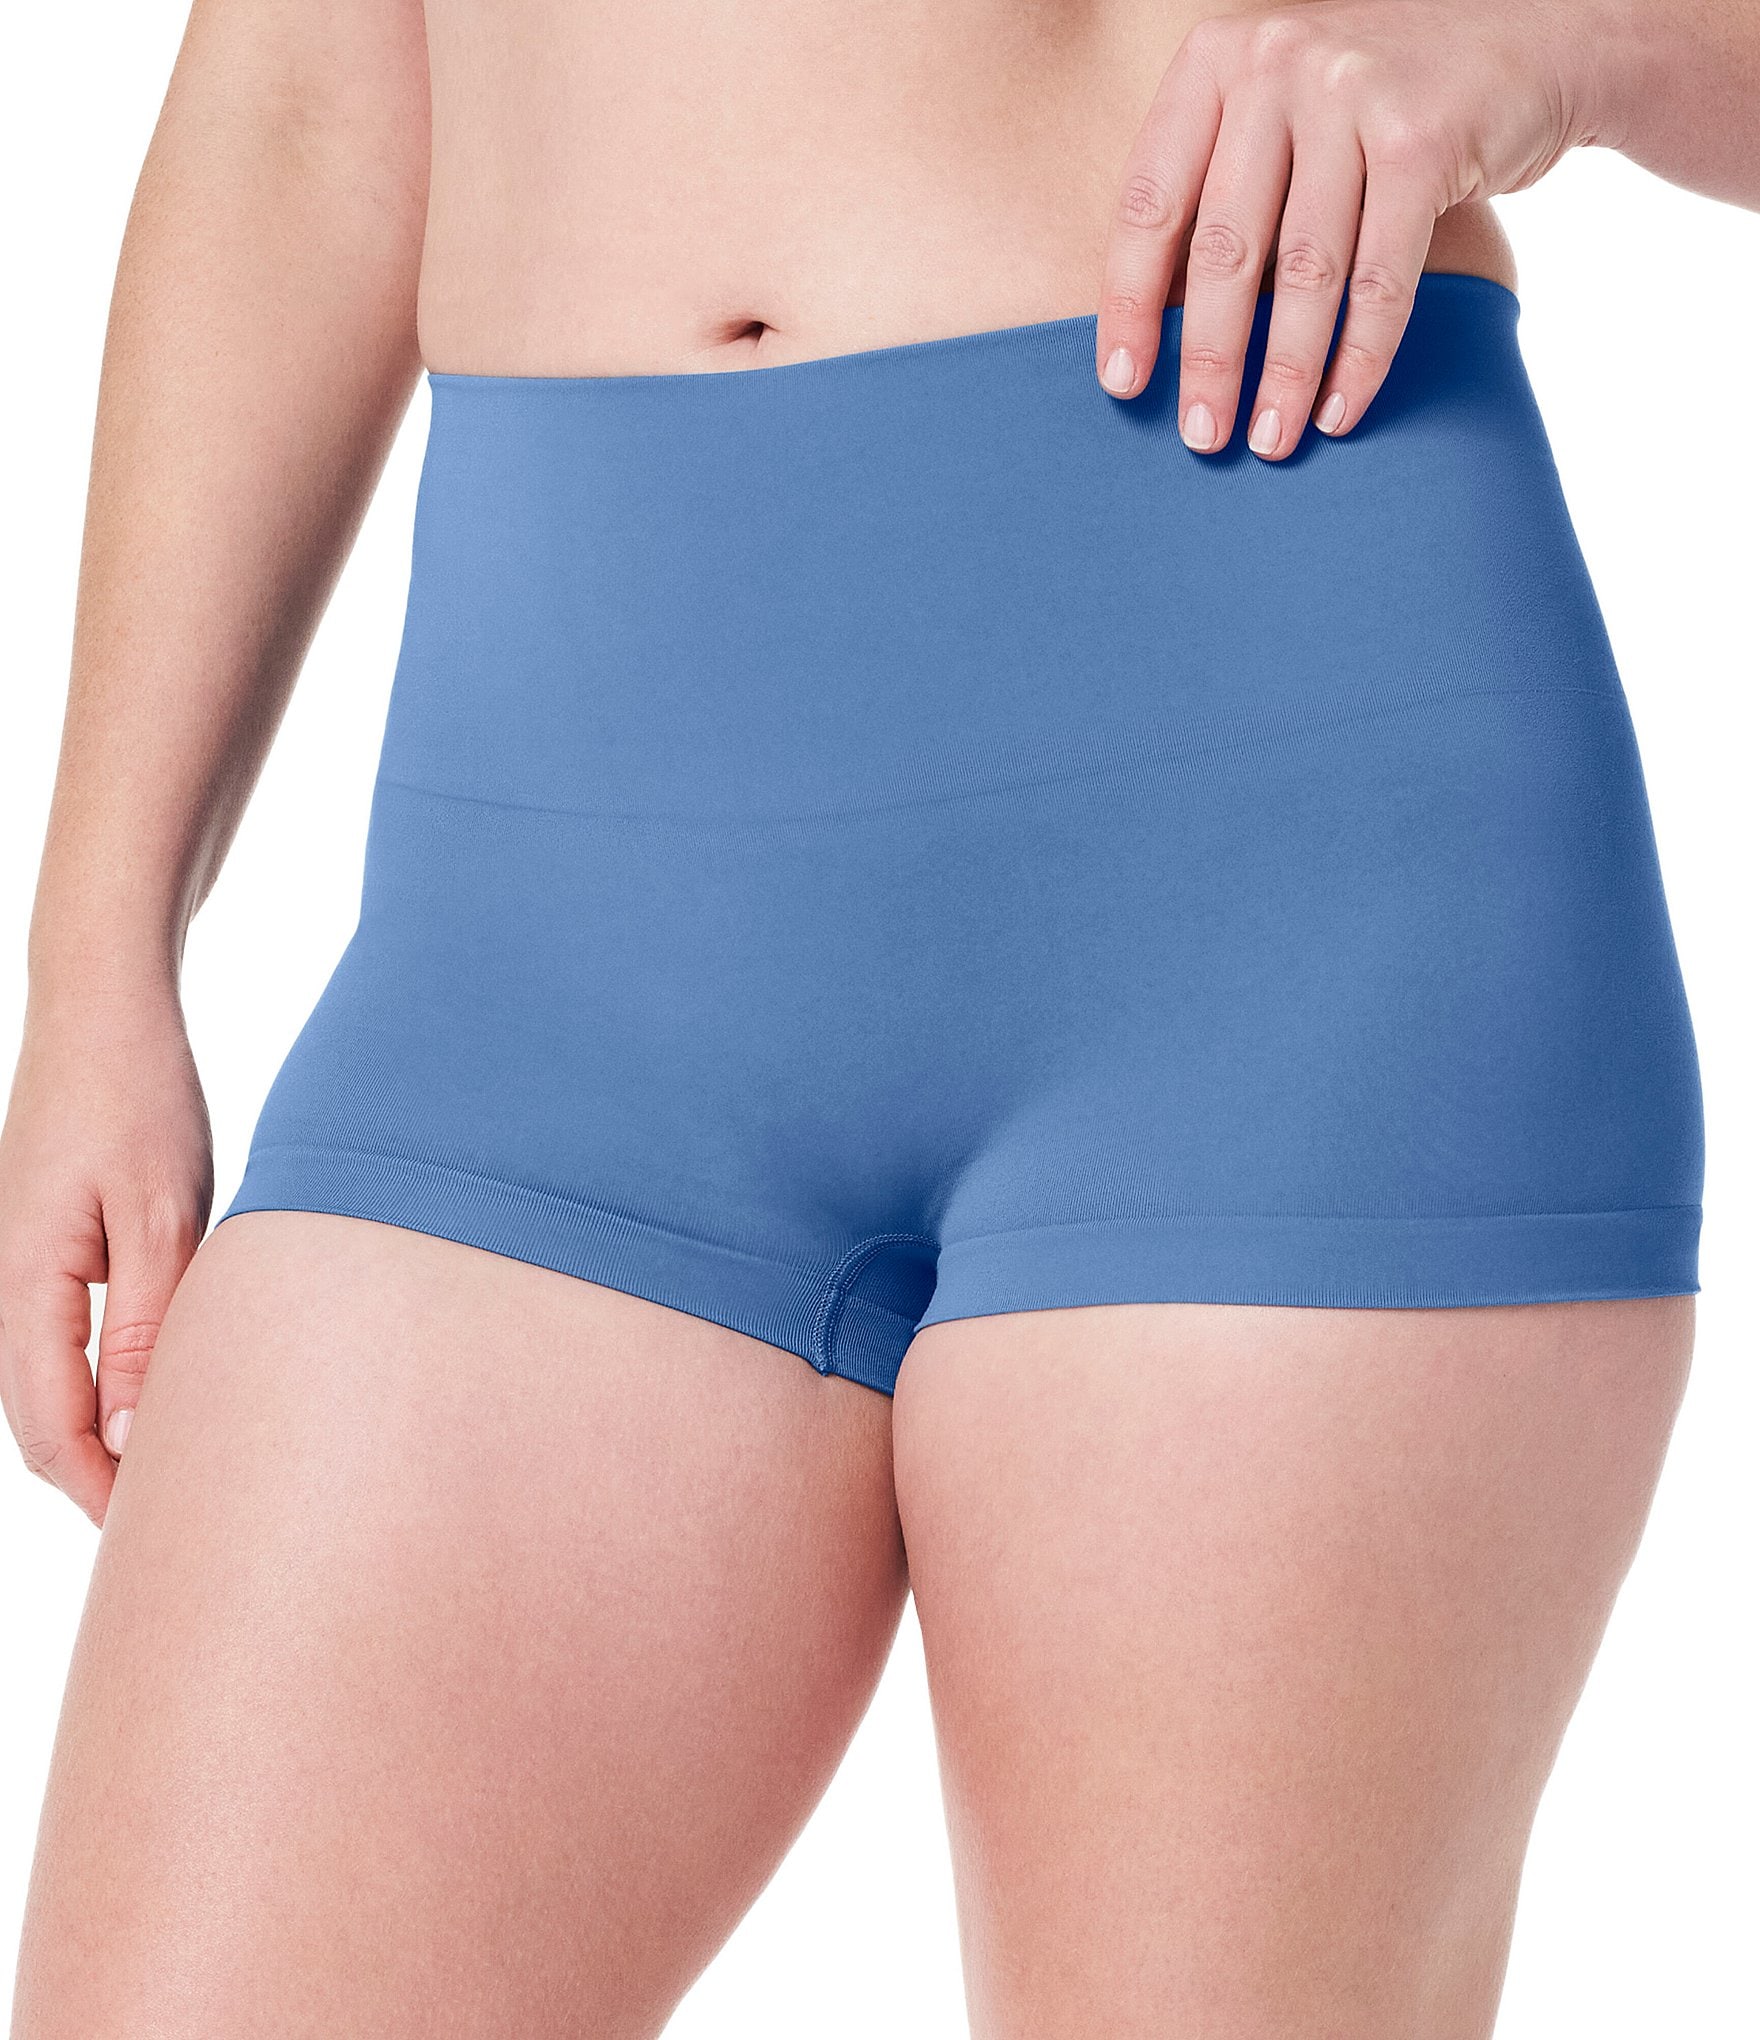 Women's SPANX® Boyshort Panties